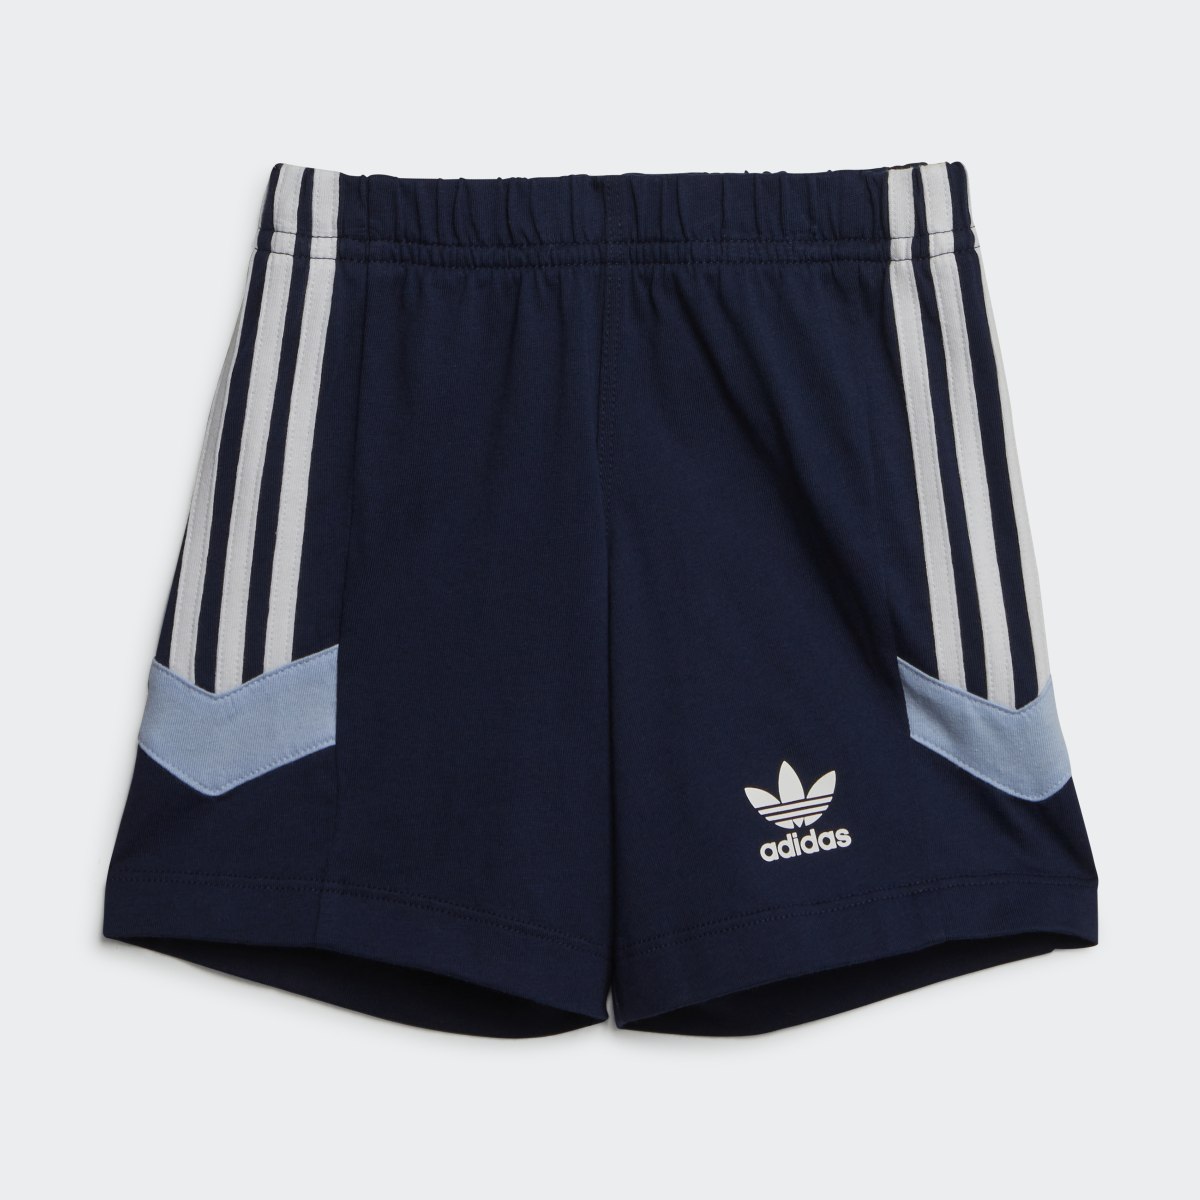 Adidas Rekive Shorts and Tee Set. 5